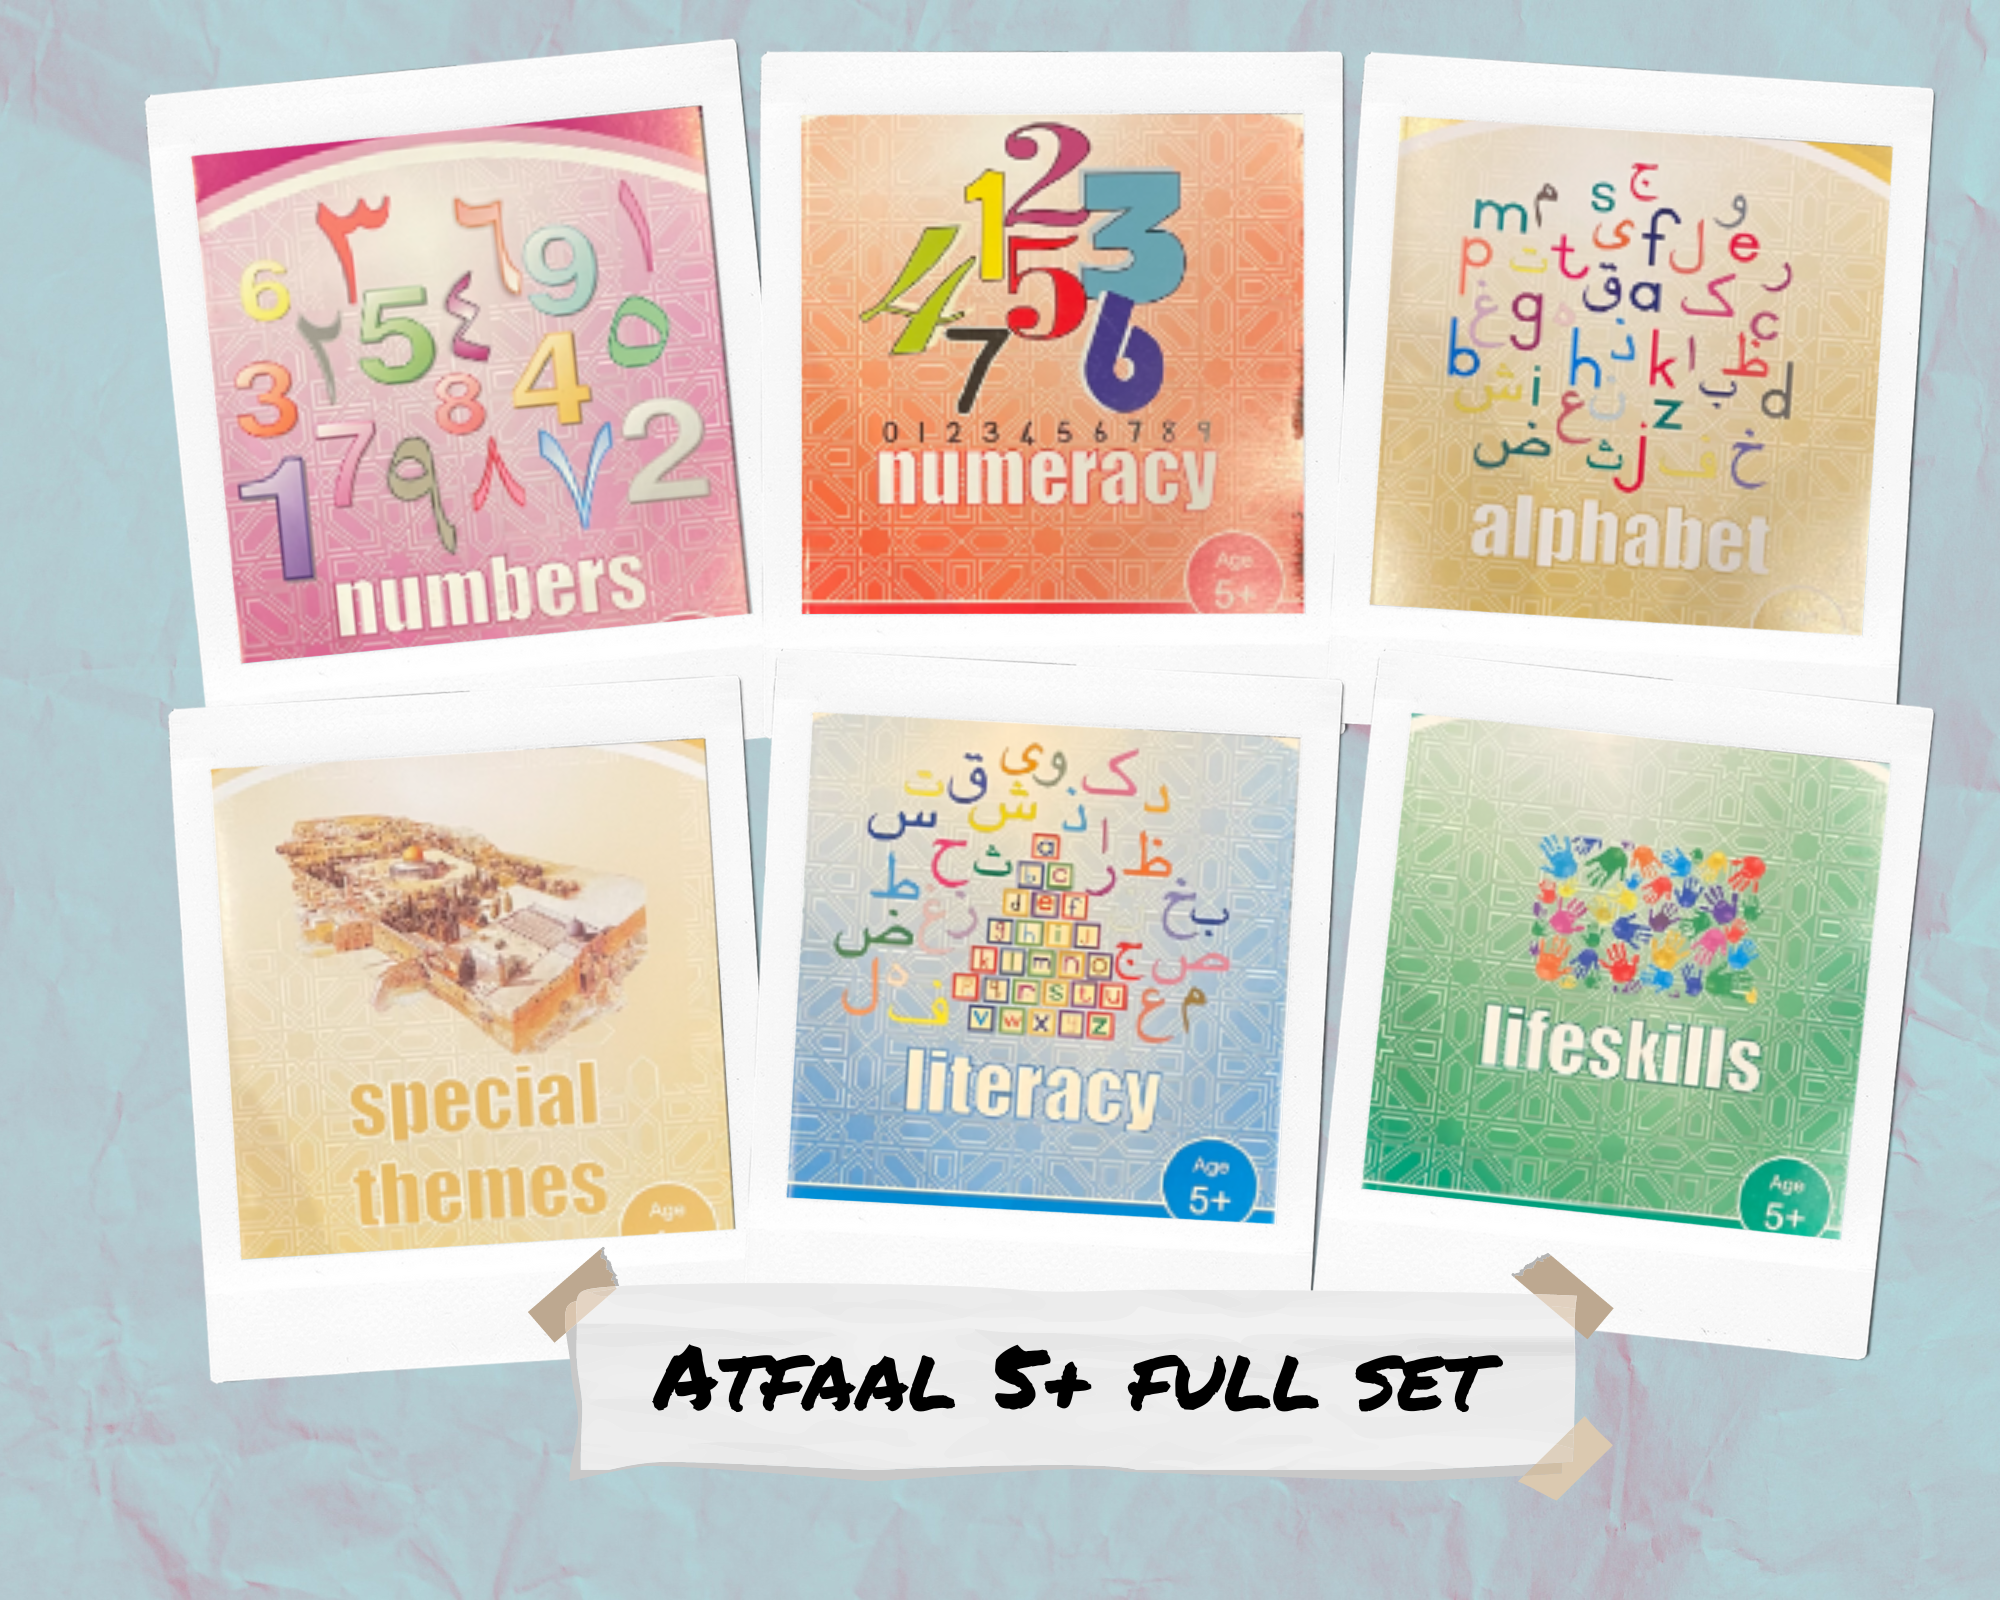 Atfaal Series 5+ Full Set